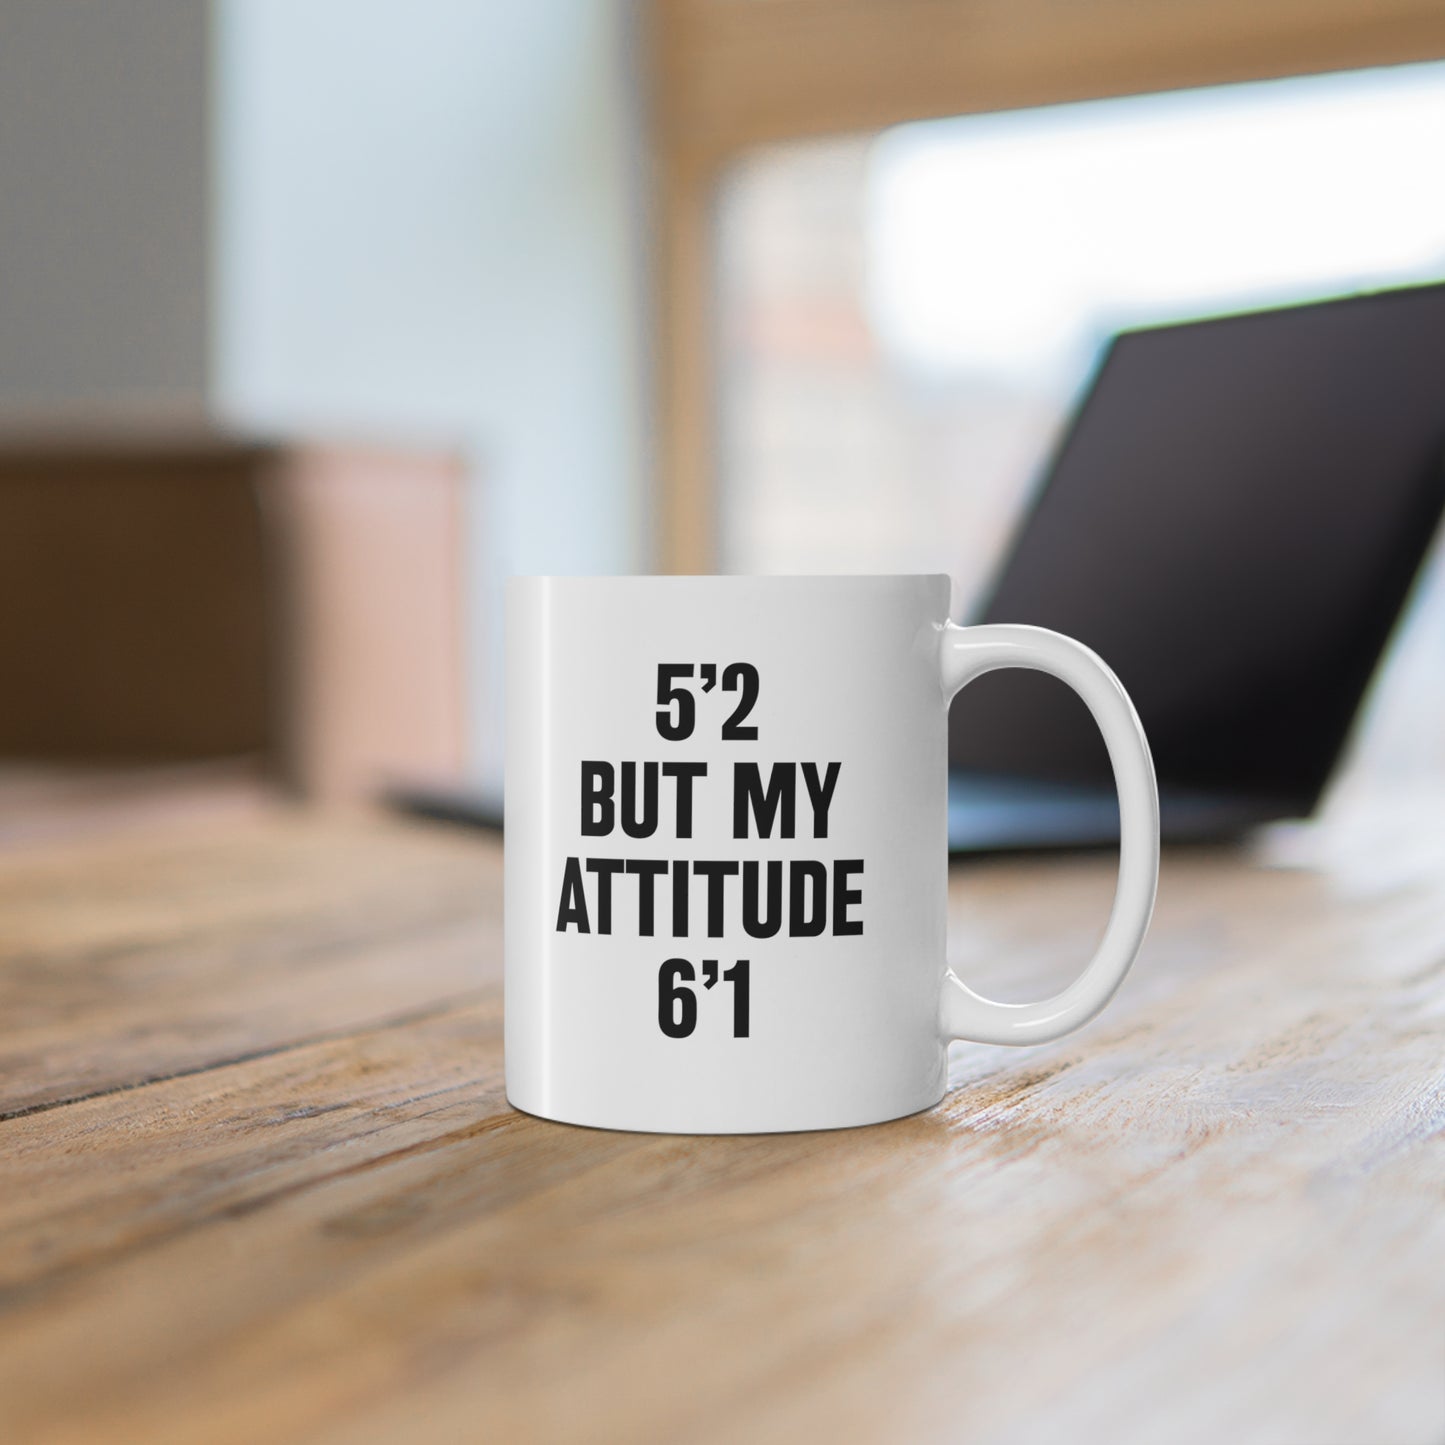 5 2 but my attitude 6 1 Coffee Mug